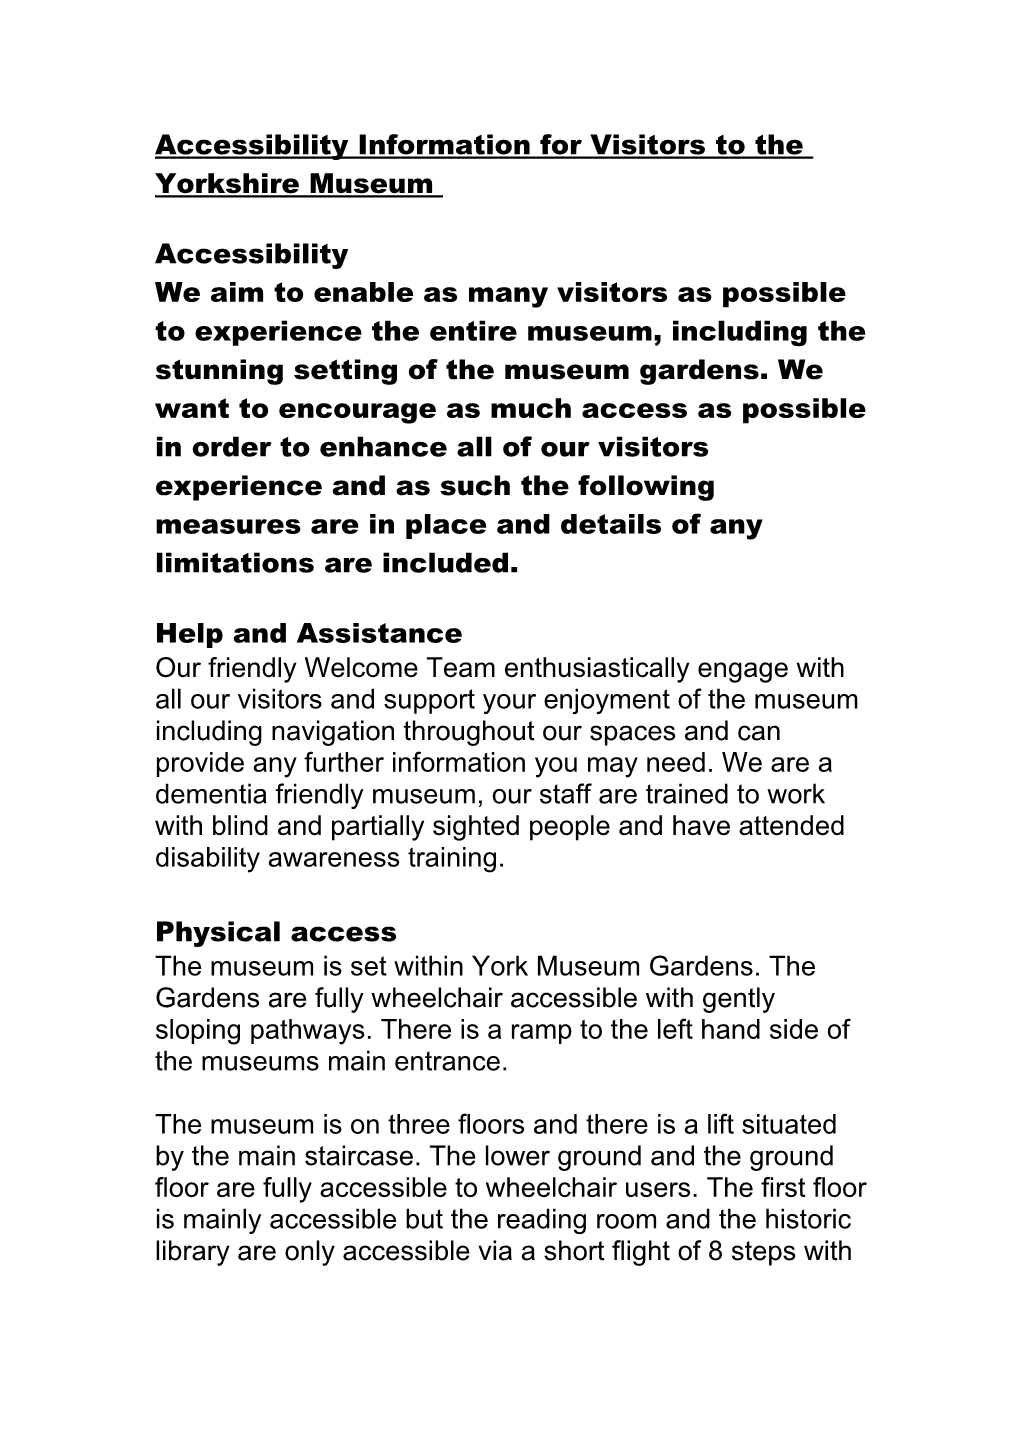 Accessibility York Art Gallery